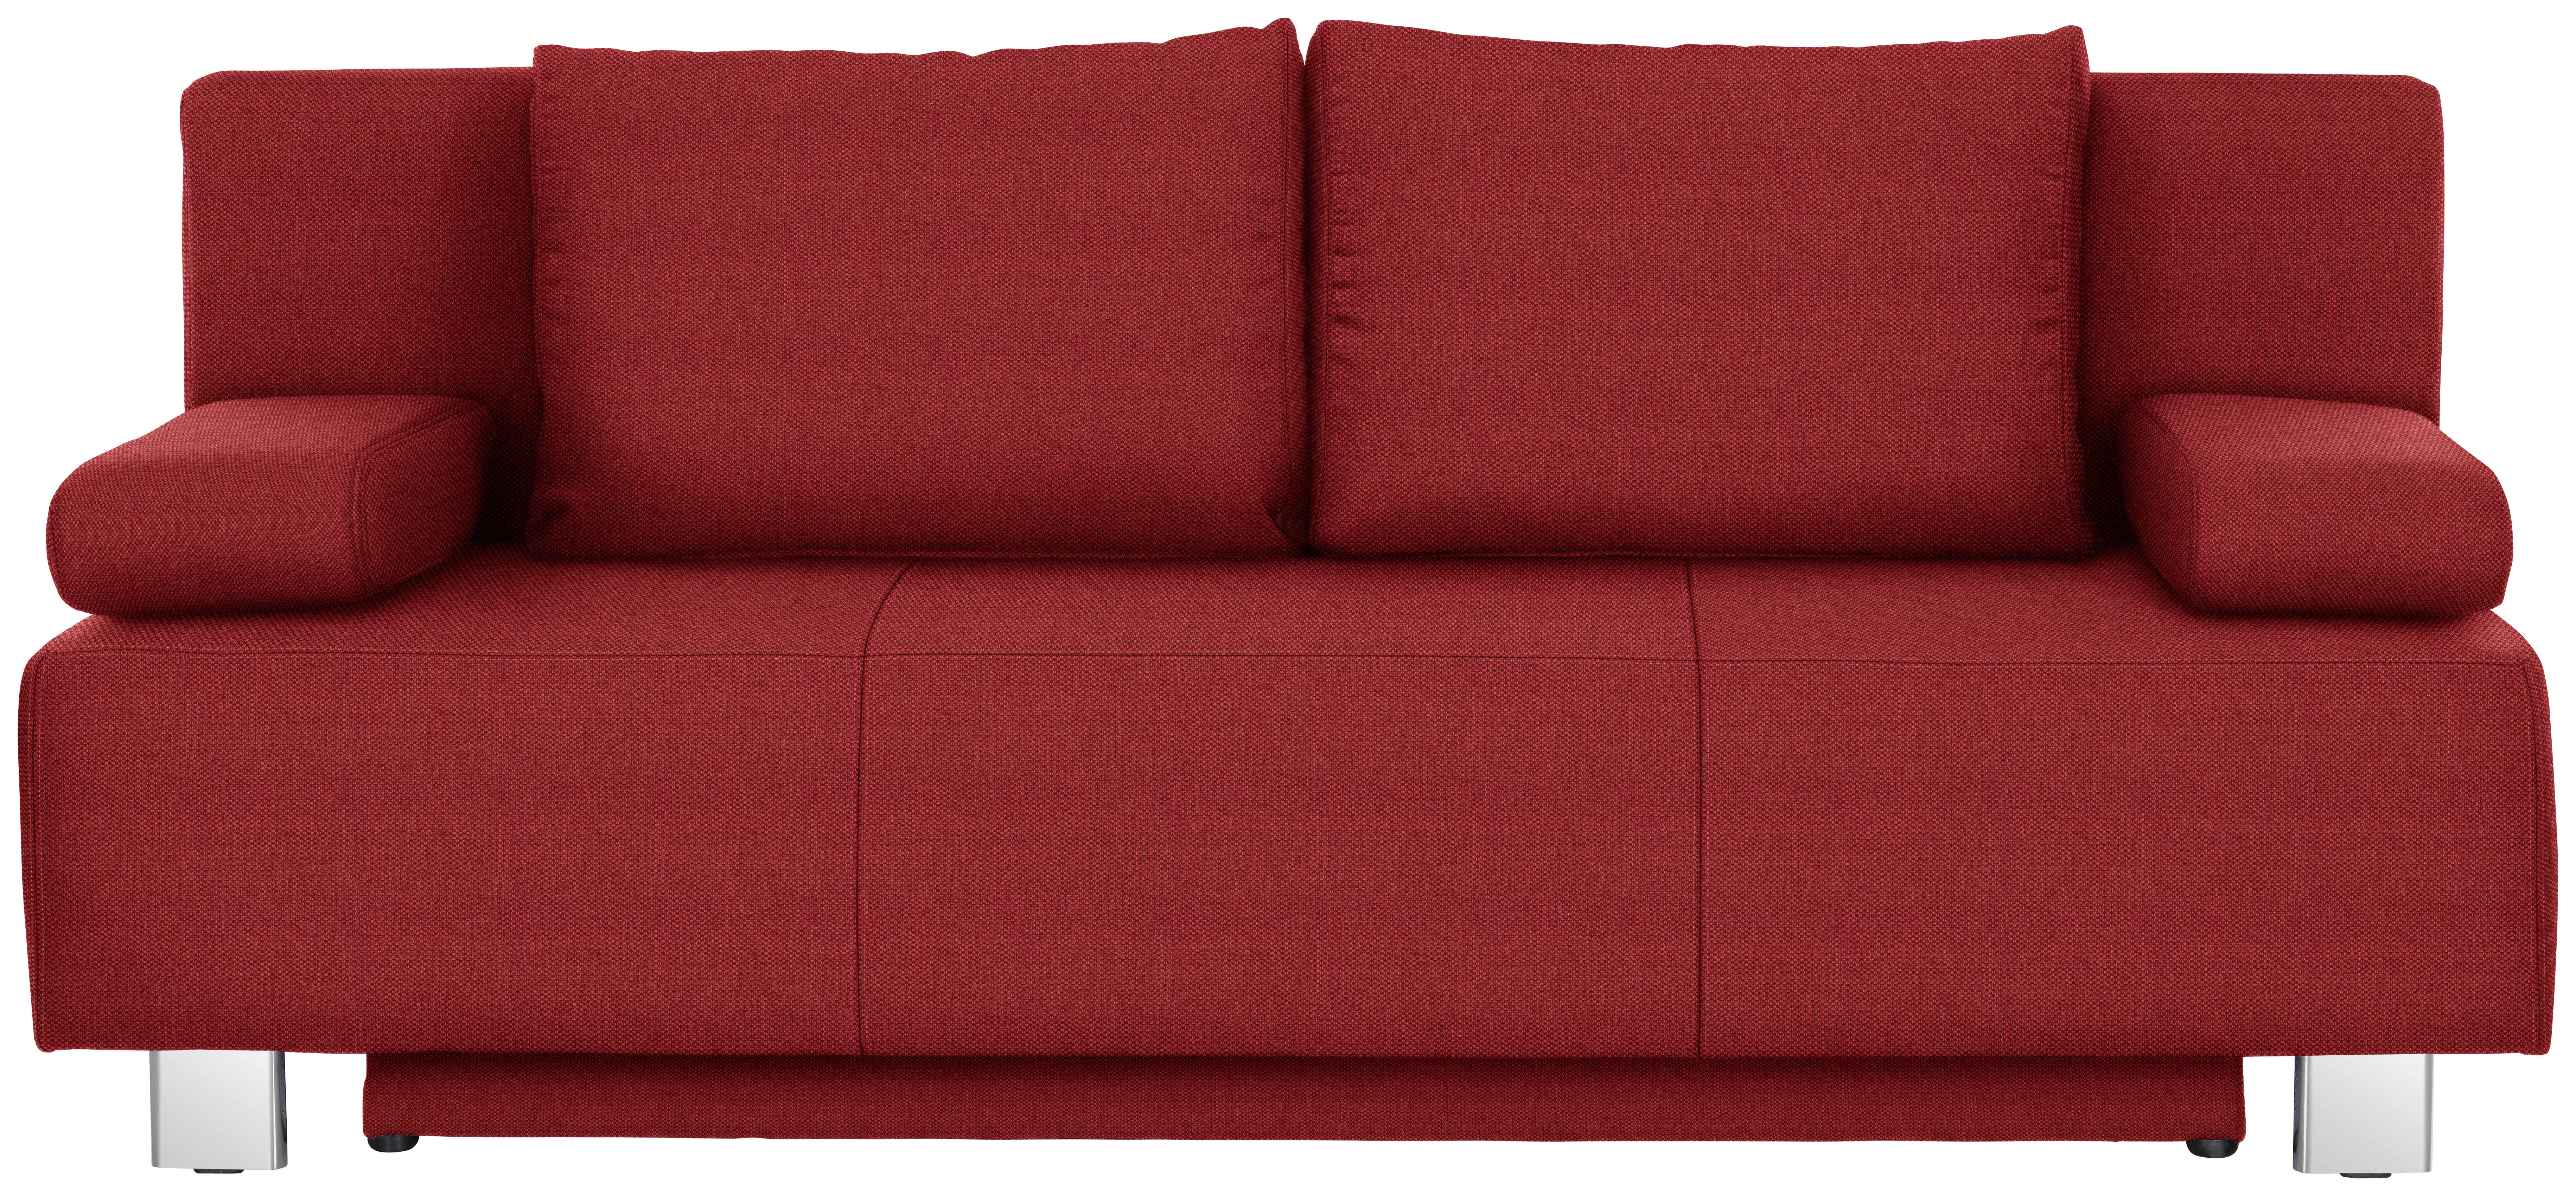 SCHLAFSOFA Rot  - Chromfarben/Rot, Design, Textil/Metall (197/88/89cm) - Livetastic